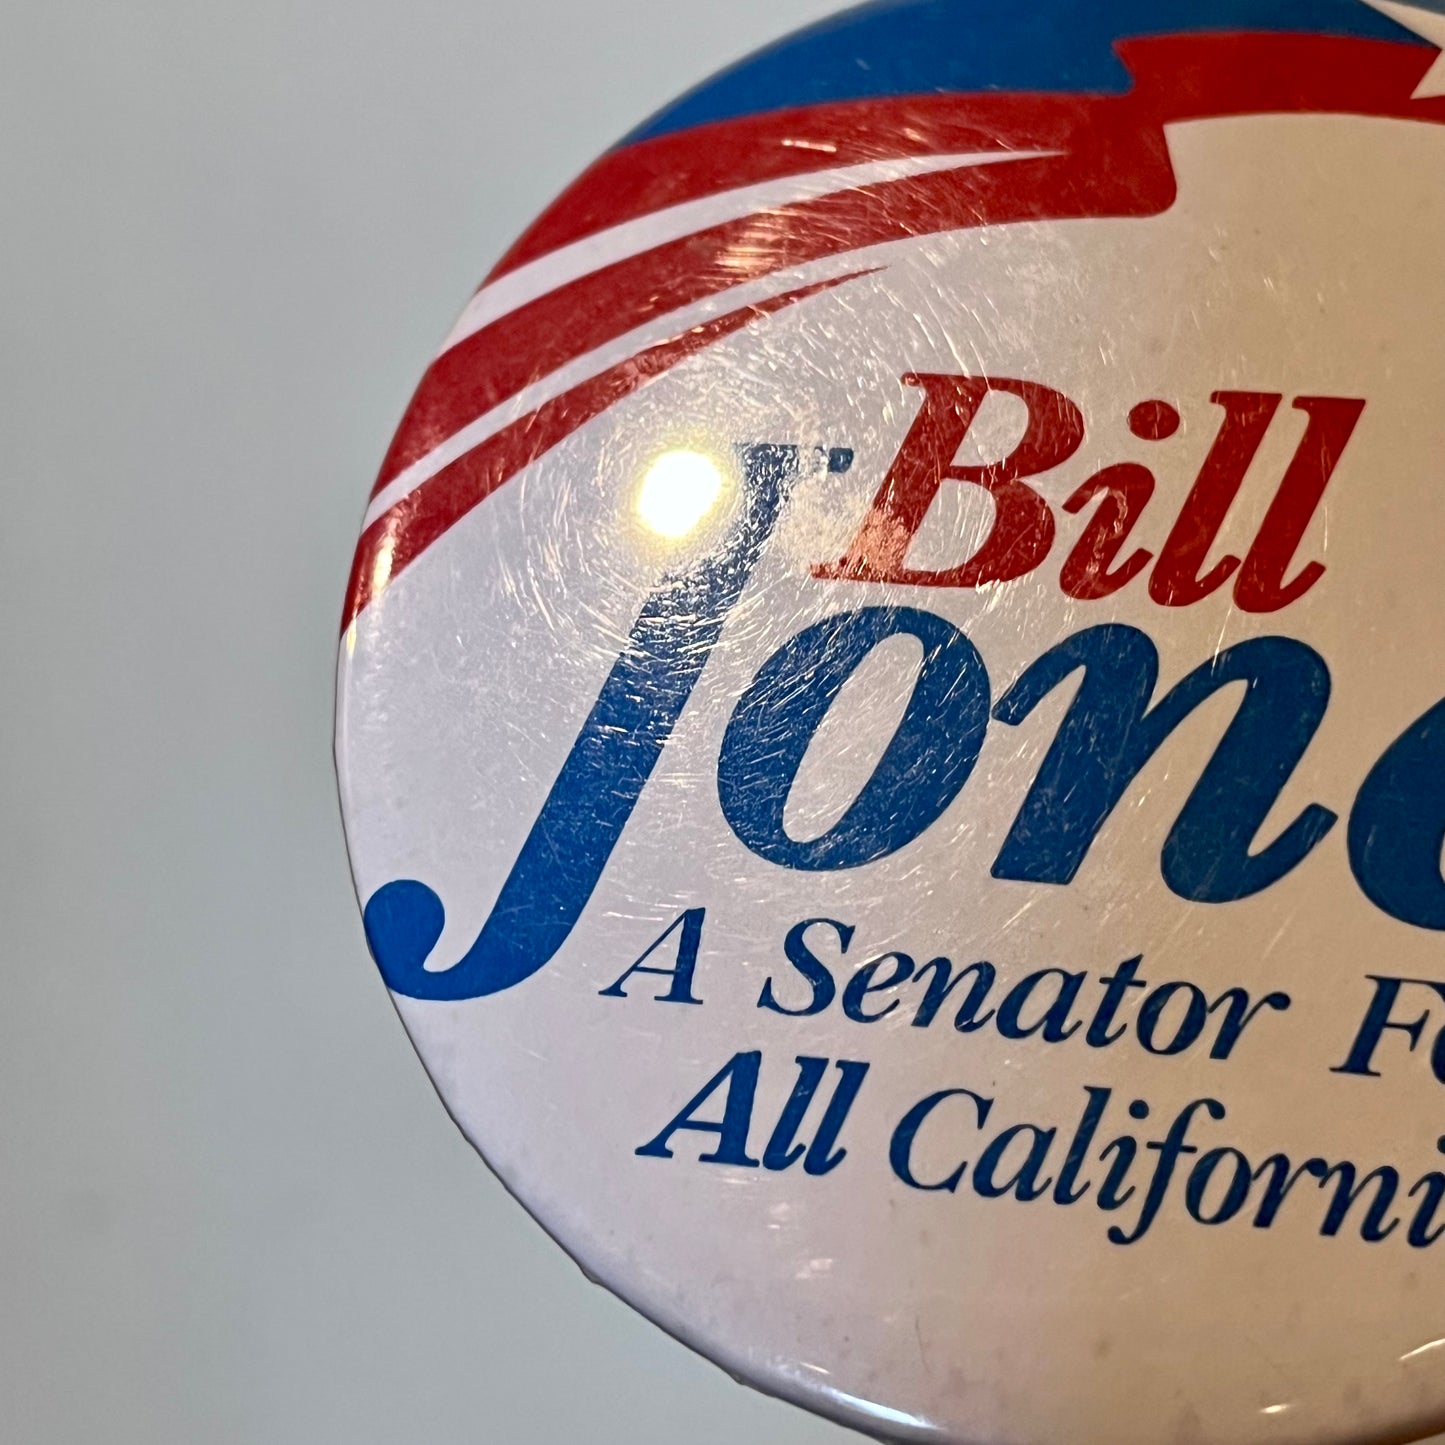 【USA vintage】ビル・ジョーンズ 上院議員 選挙缶バッジ